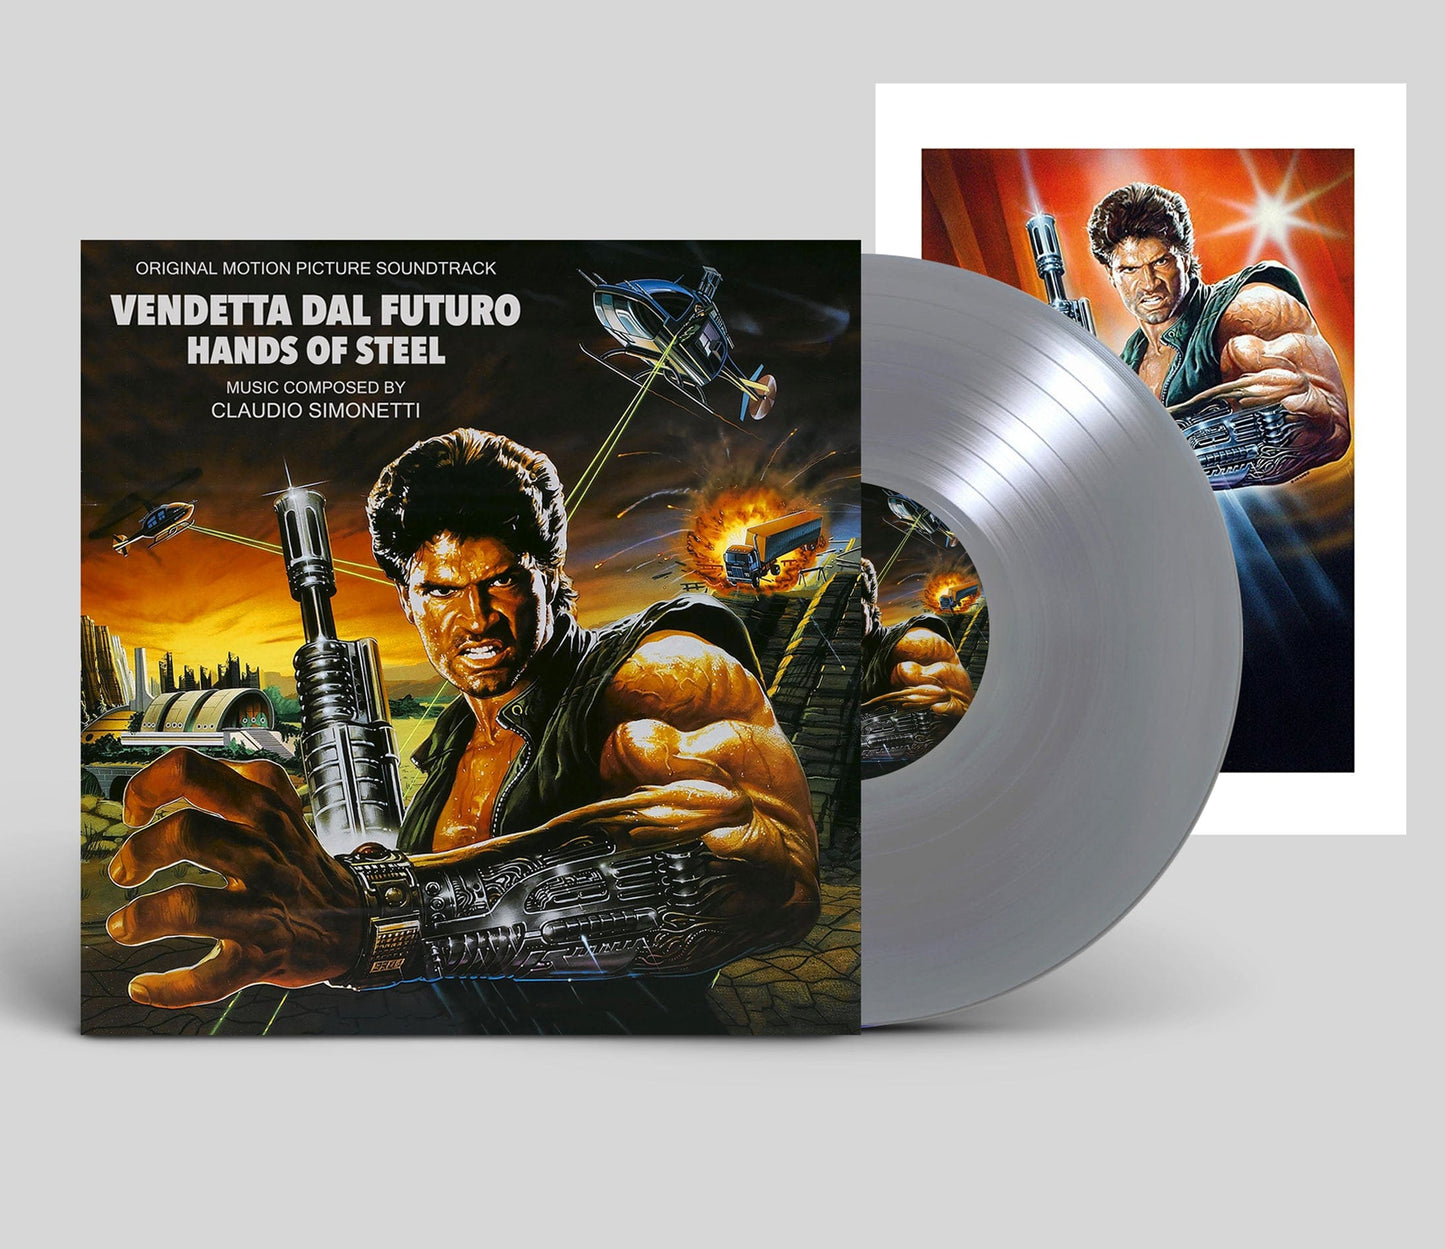 HANDS OF STEEL (VENDETTA DAL FUTORO): Original Motion Pictire Soundtrack Music Composed By Claudio Simonetti (limited silver vinyl with poster!, 499 Copies) LP